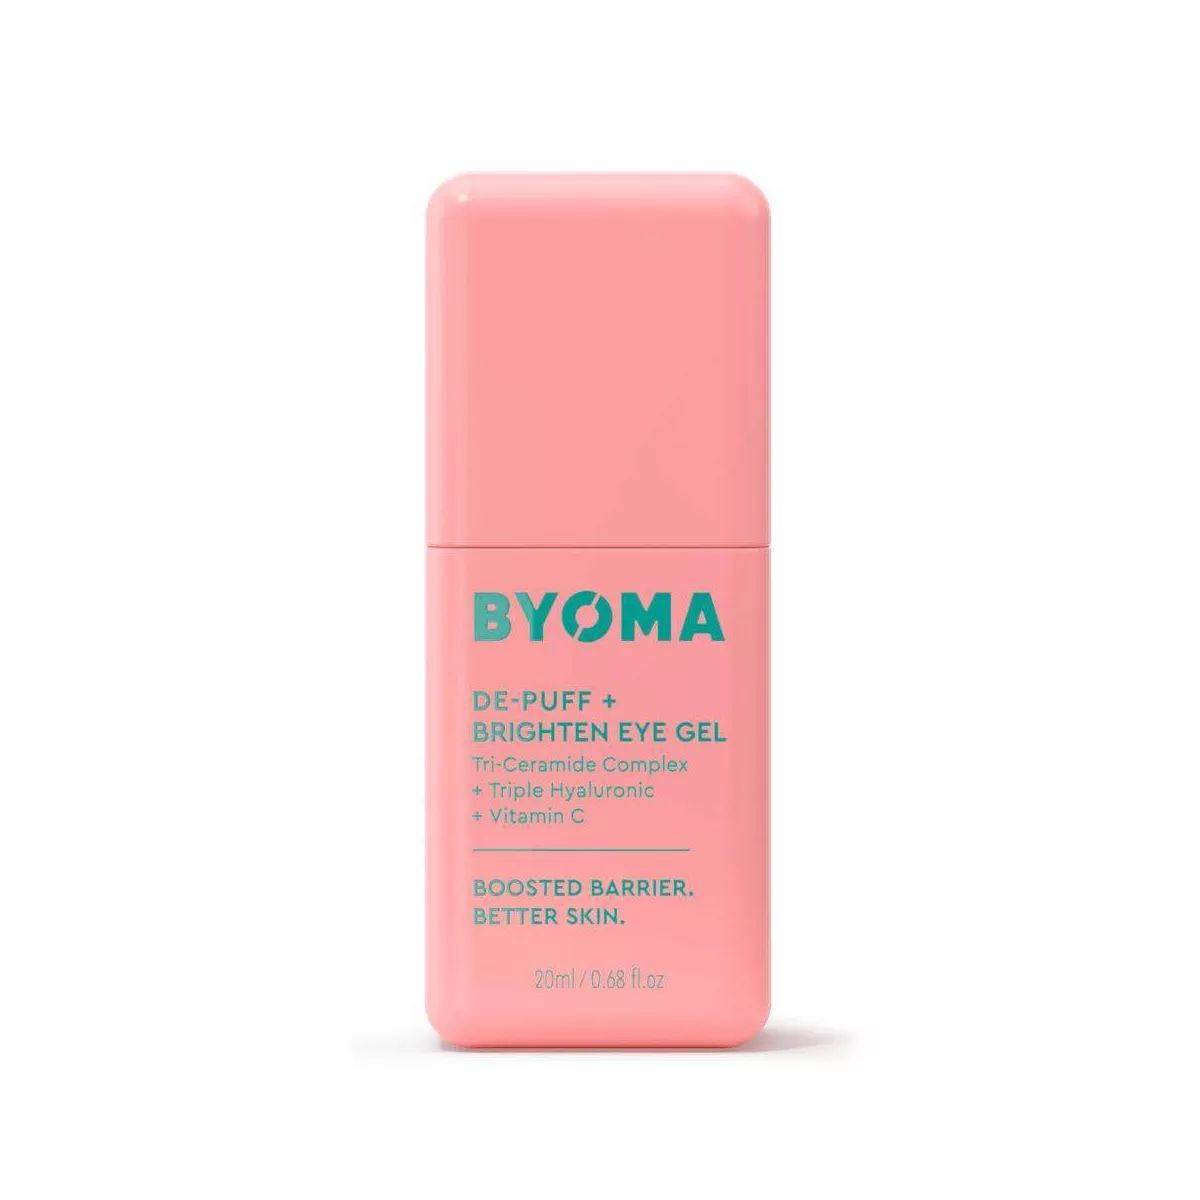 BYOMA De-Puff and Brightening Eye Gel - 0.68 fl oz | Target